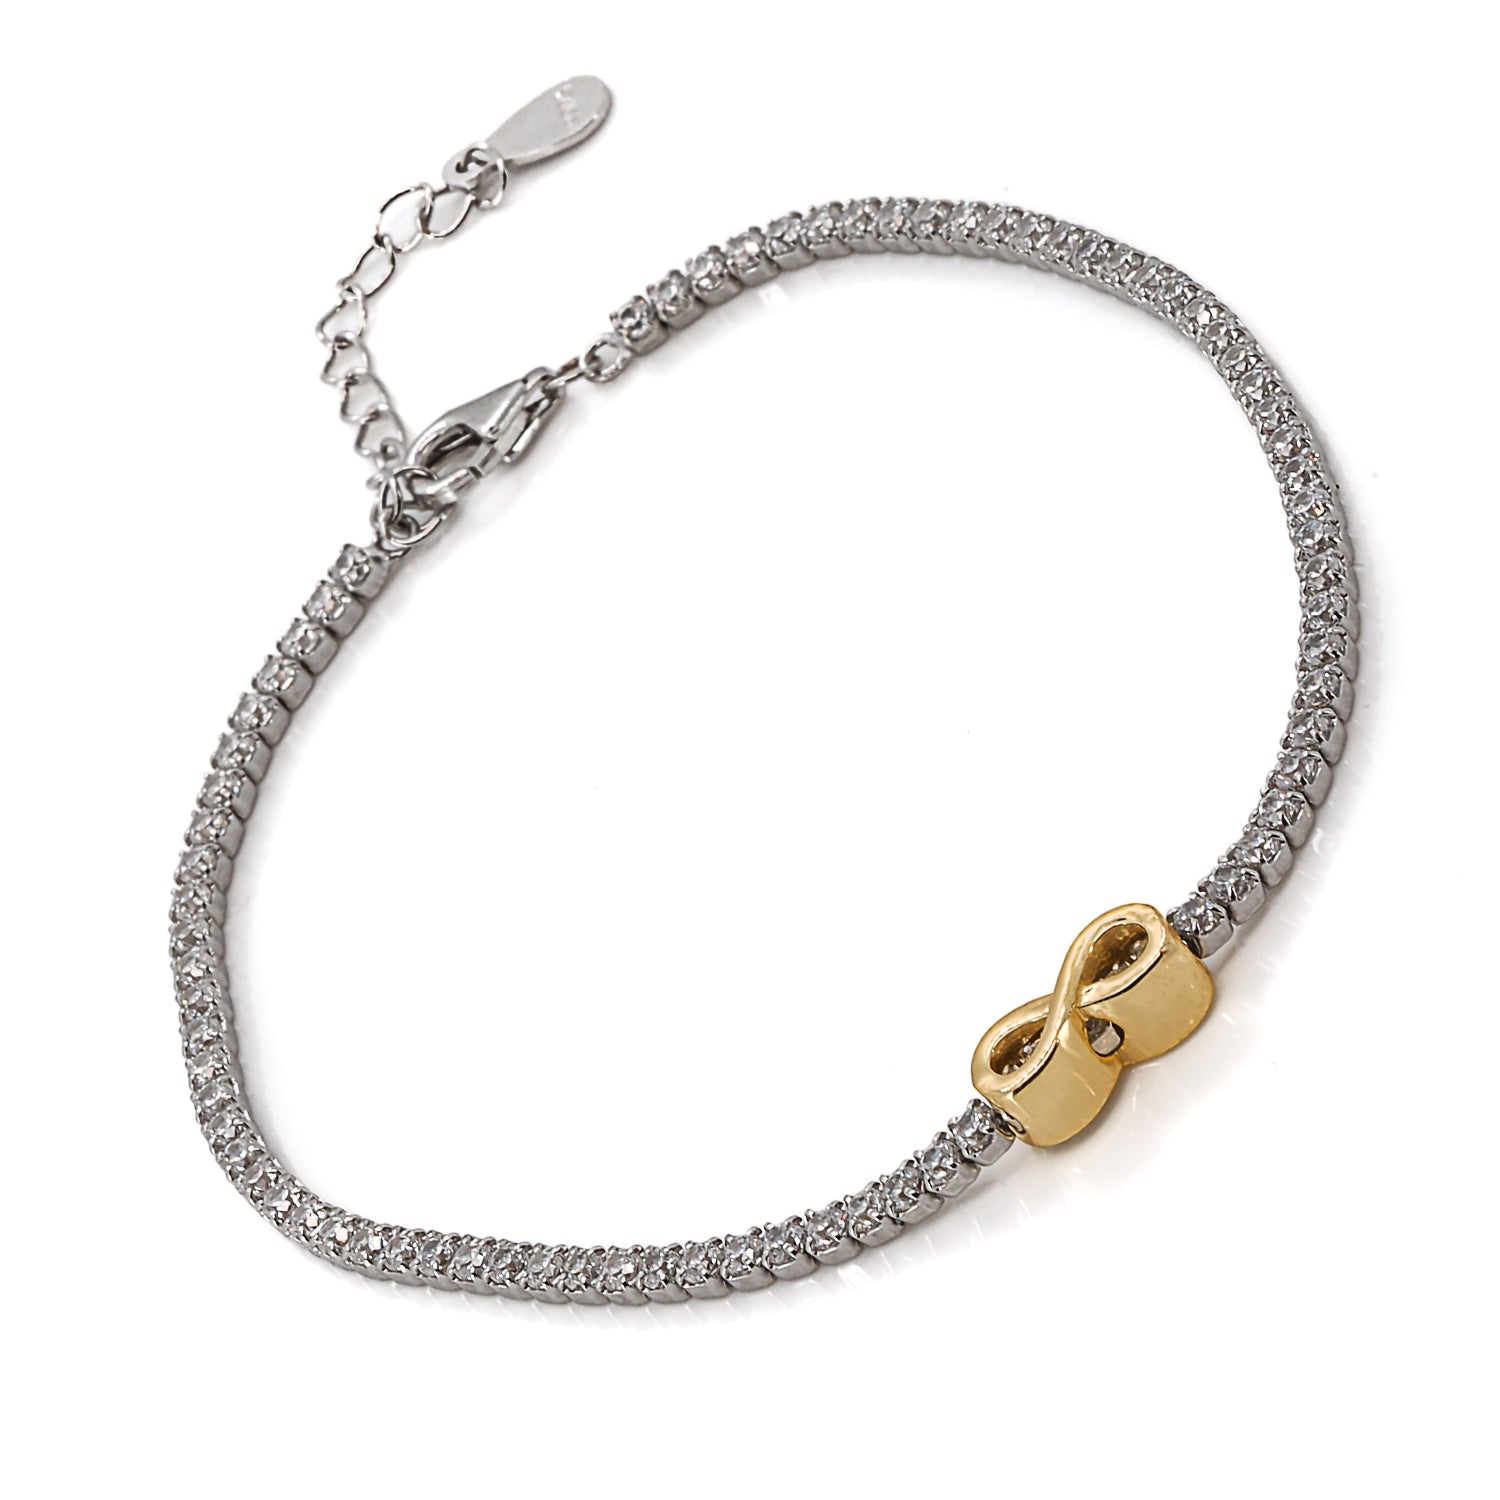 Zircon stones shimmer: Gold Infinity Bracelet's elegance.